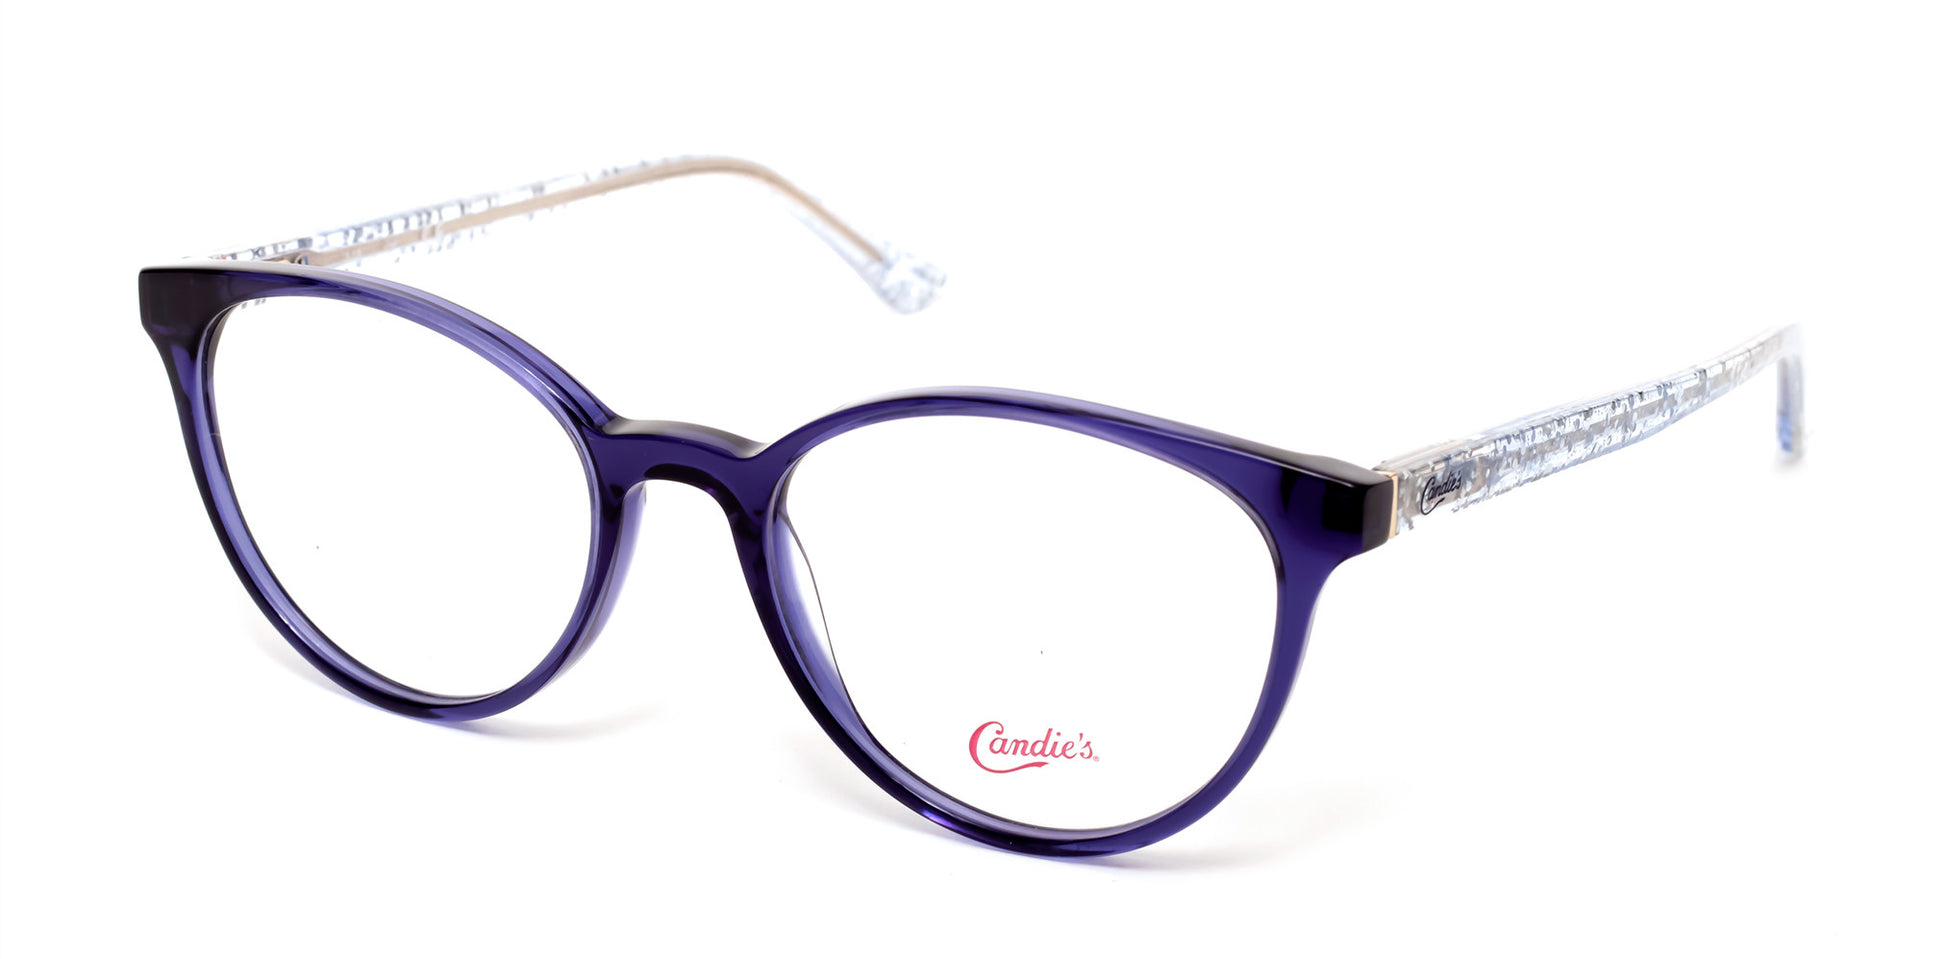 Candies CA0165 Round Eyeglasses 090-090 - Shiny Blue